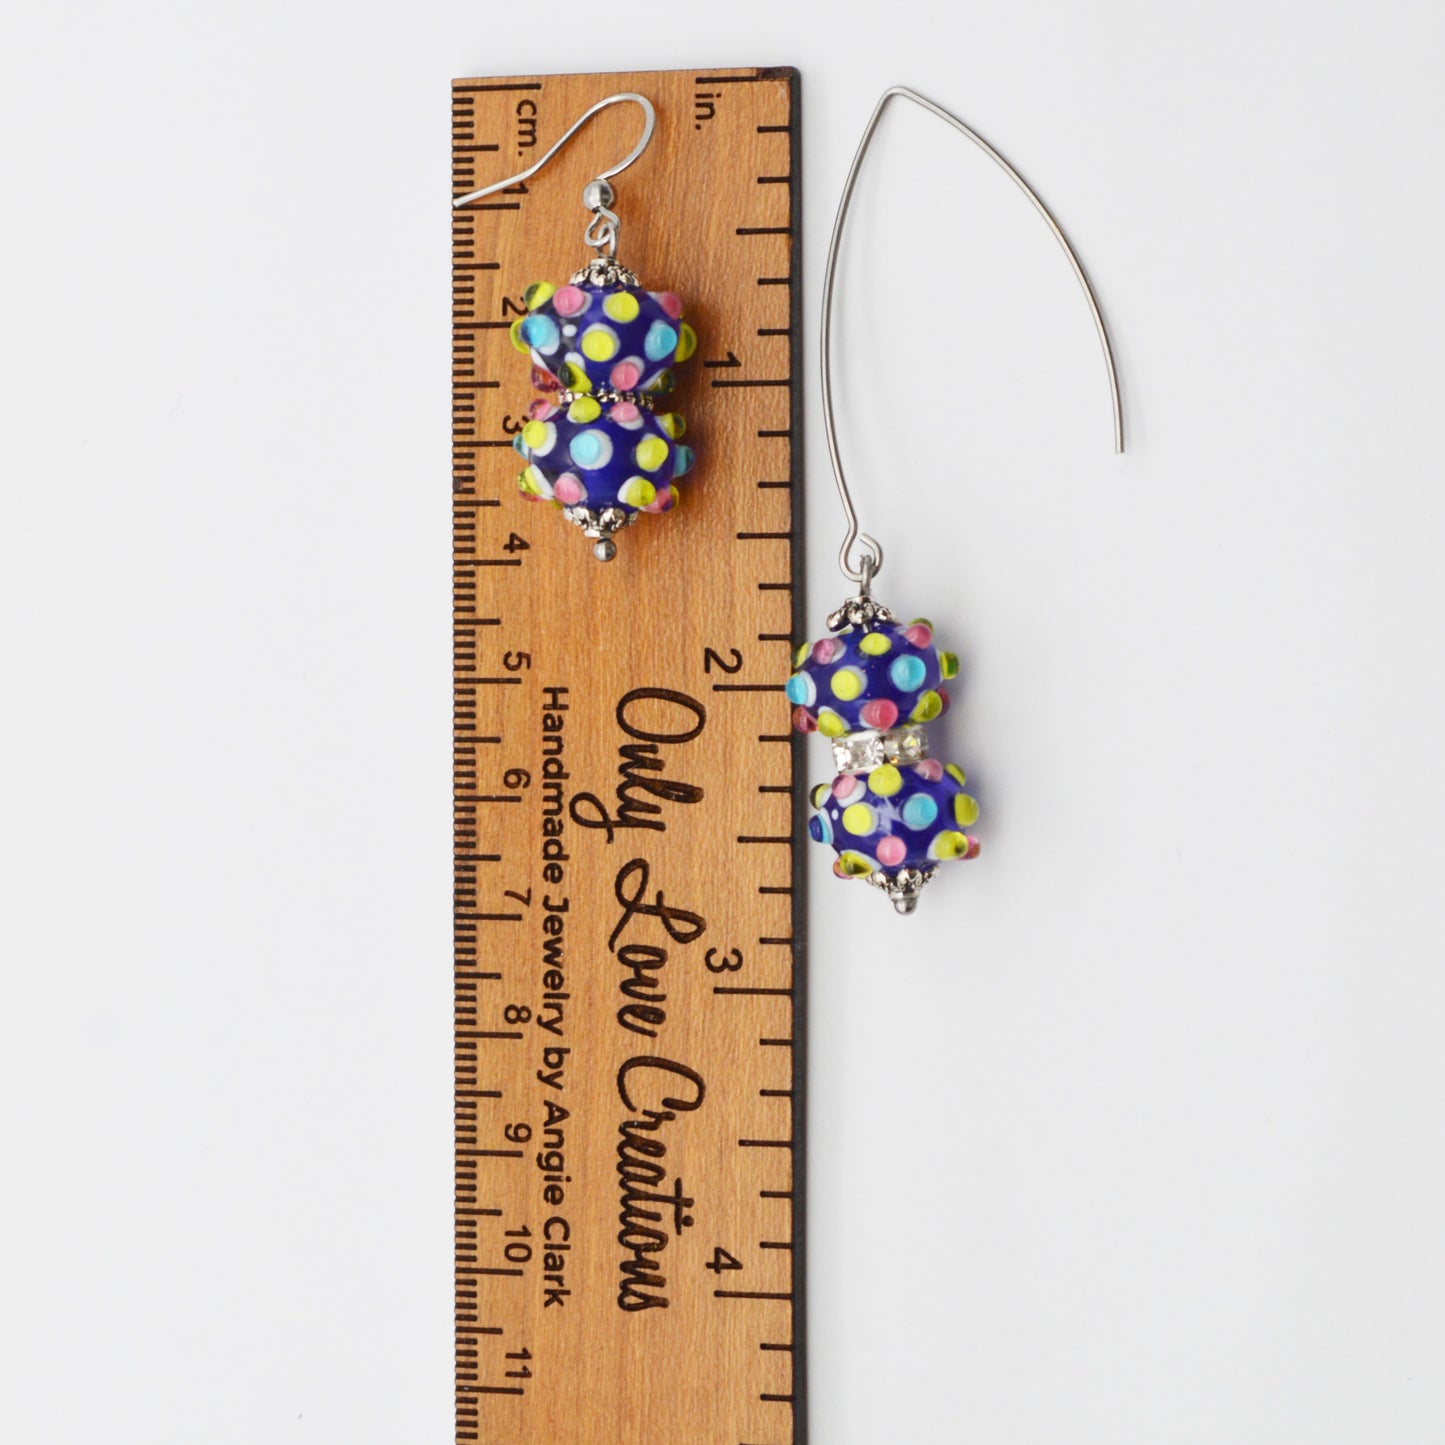 Colorful Bumpy Murano Glass Lampwork Earrings - Beads Handmade in Venice, Italy